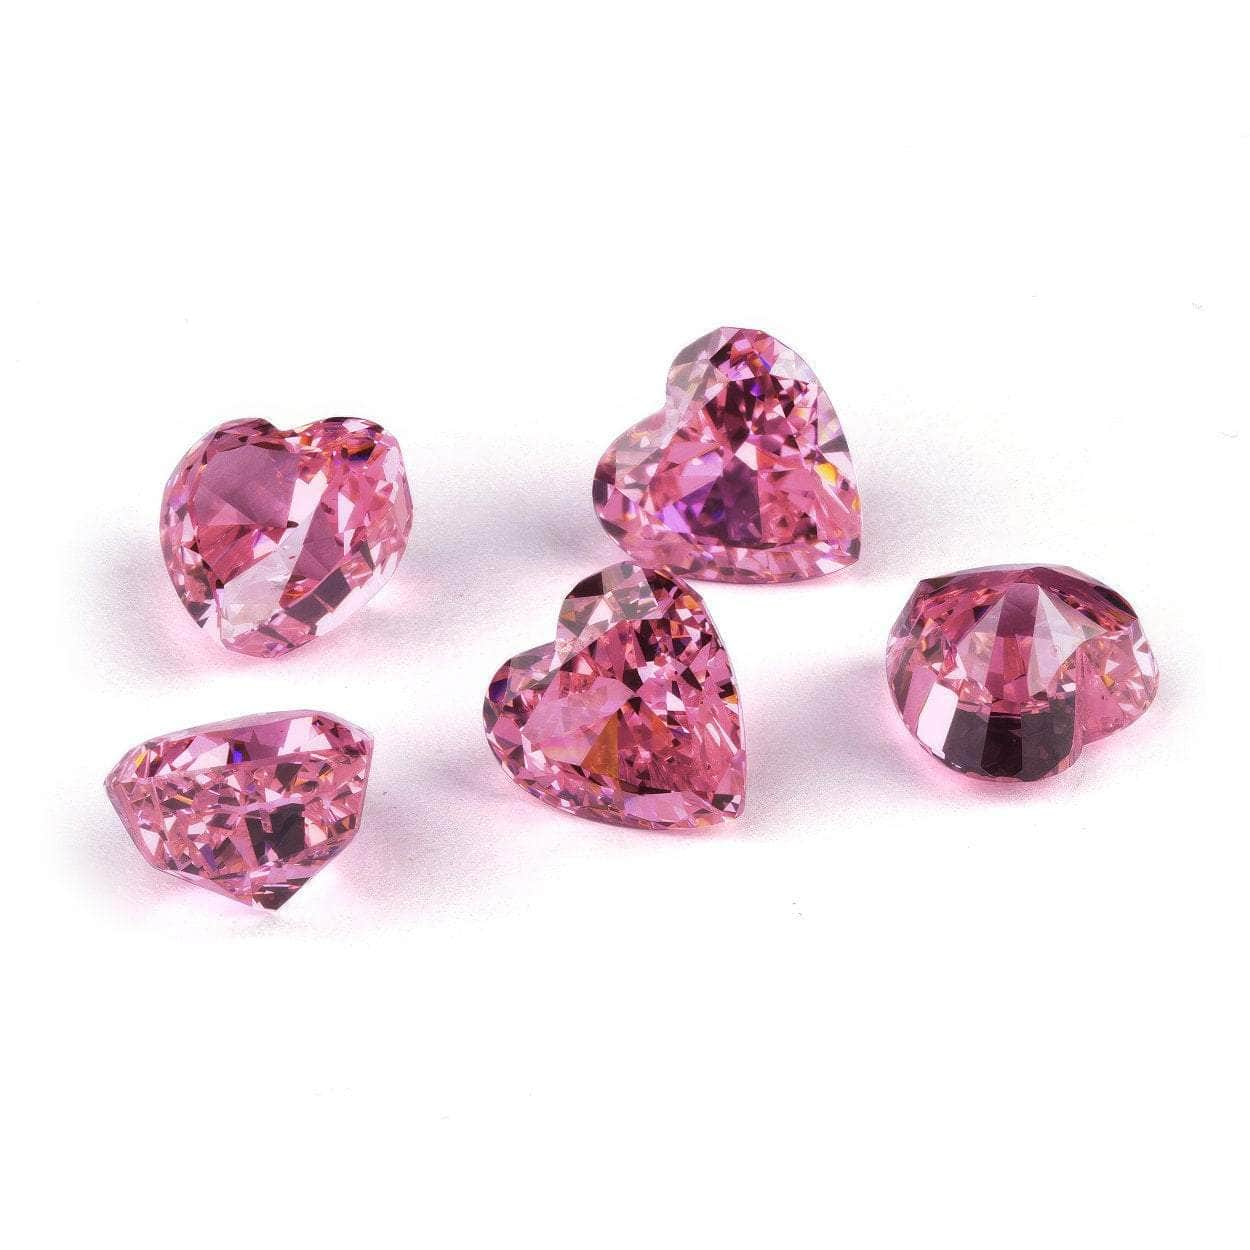 3 Set Of Pink Sapphire Heart-Cut Lab-Grown Diamond Gemstone 5*5mm / Pink Sapphire / Heart